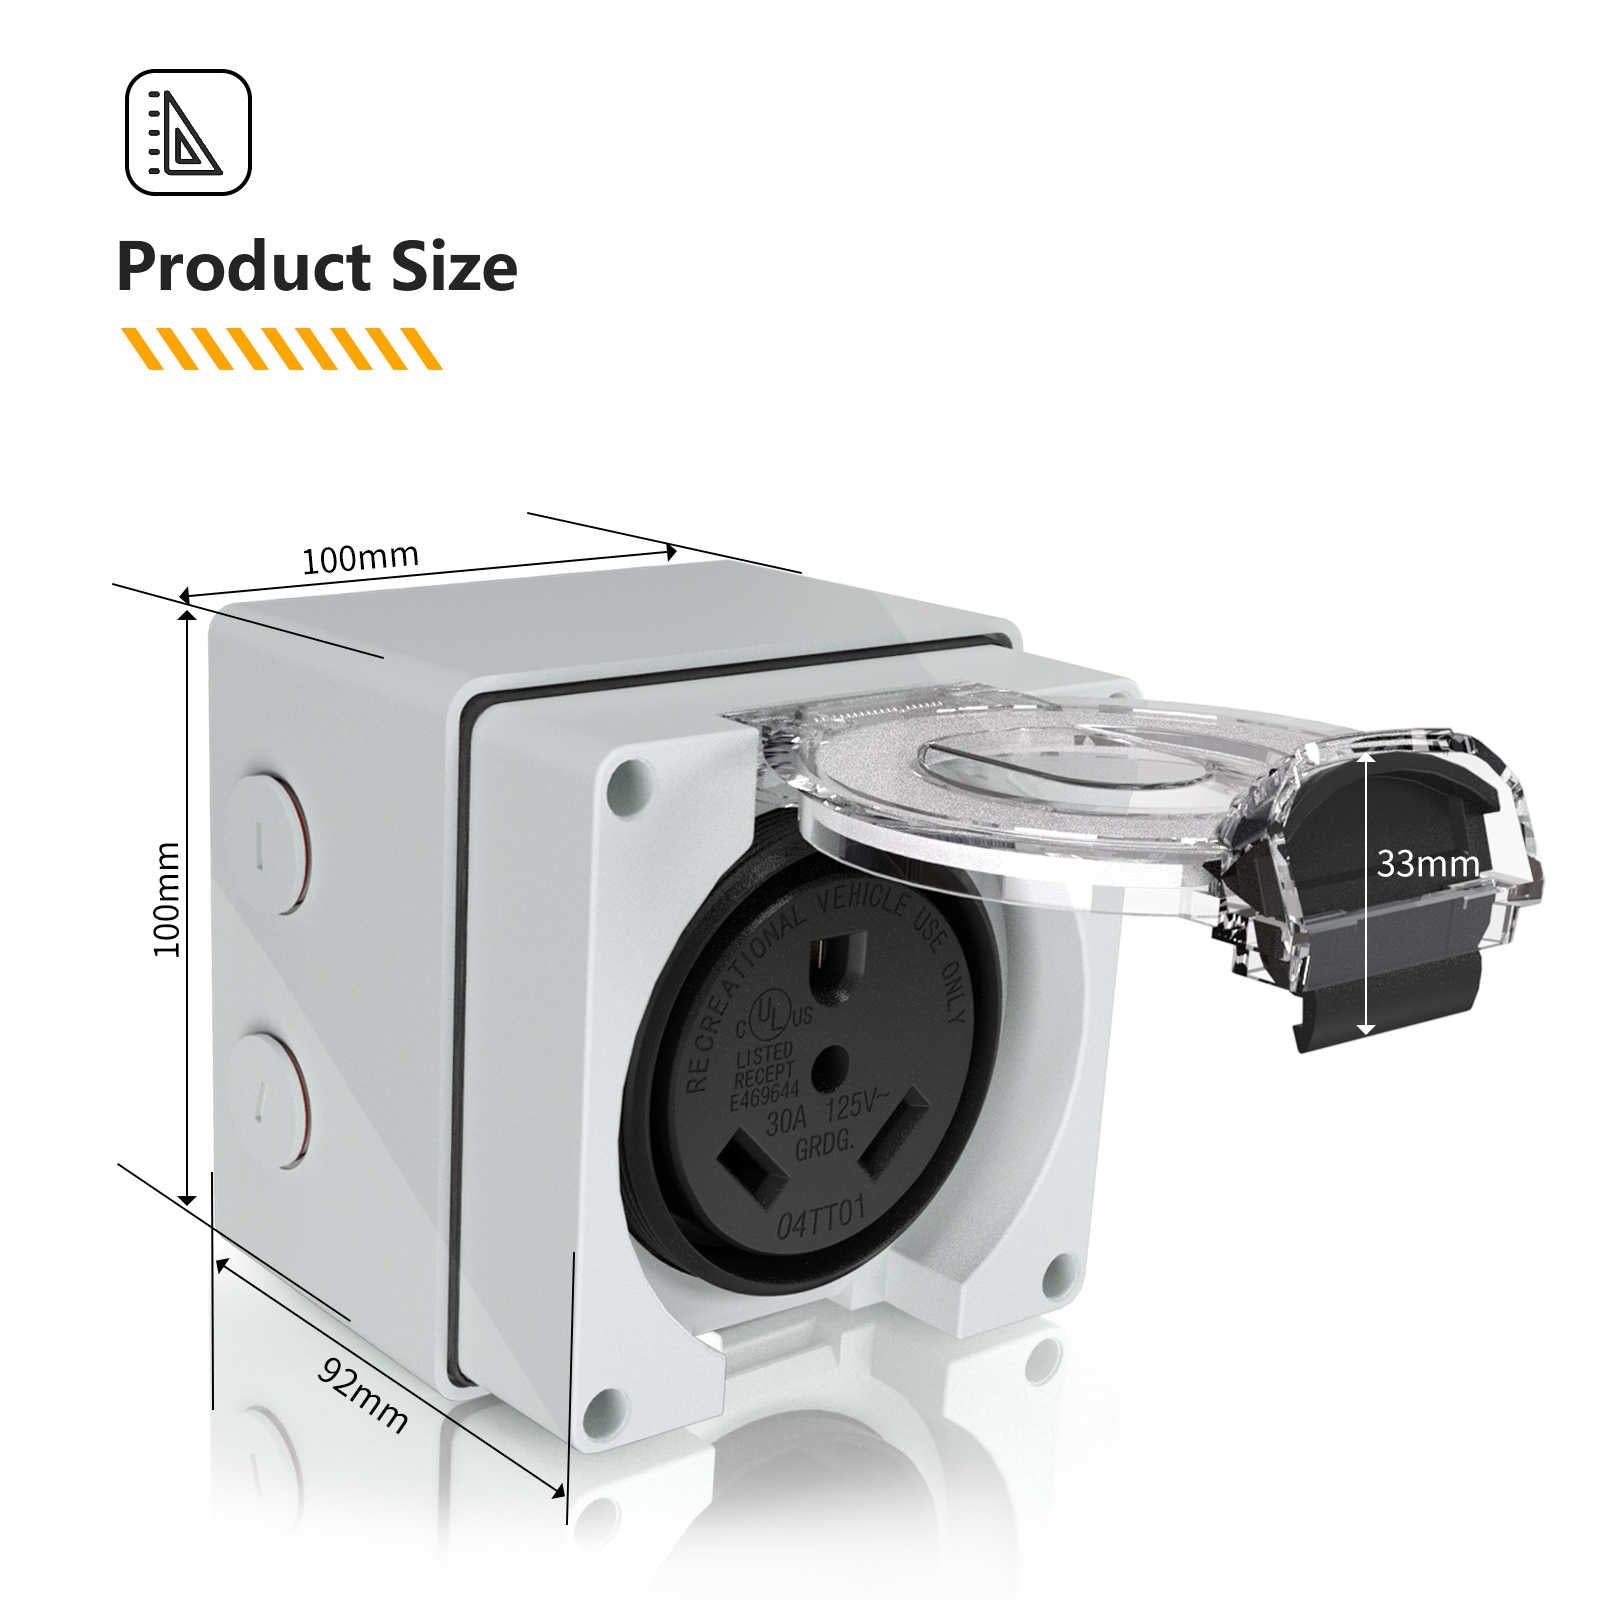 NEMA TT-30R 30Amp RV Power Outlet Box precise product size